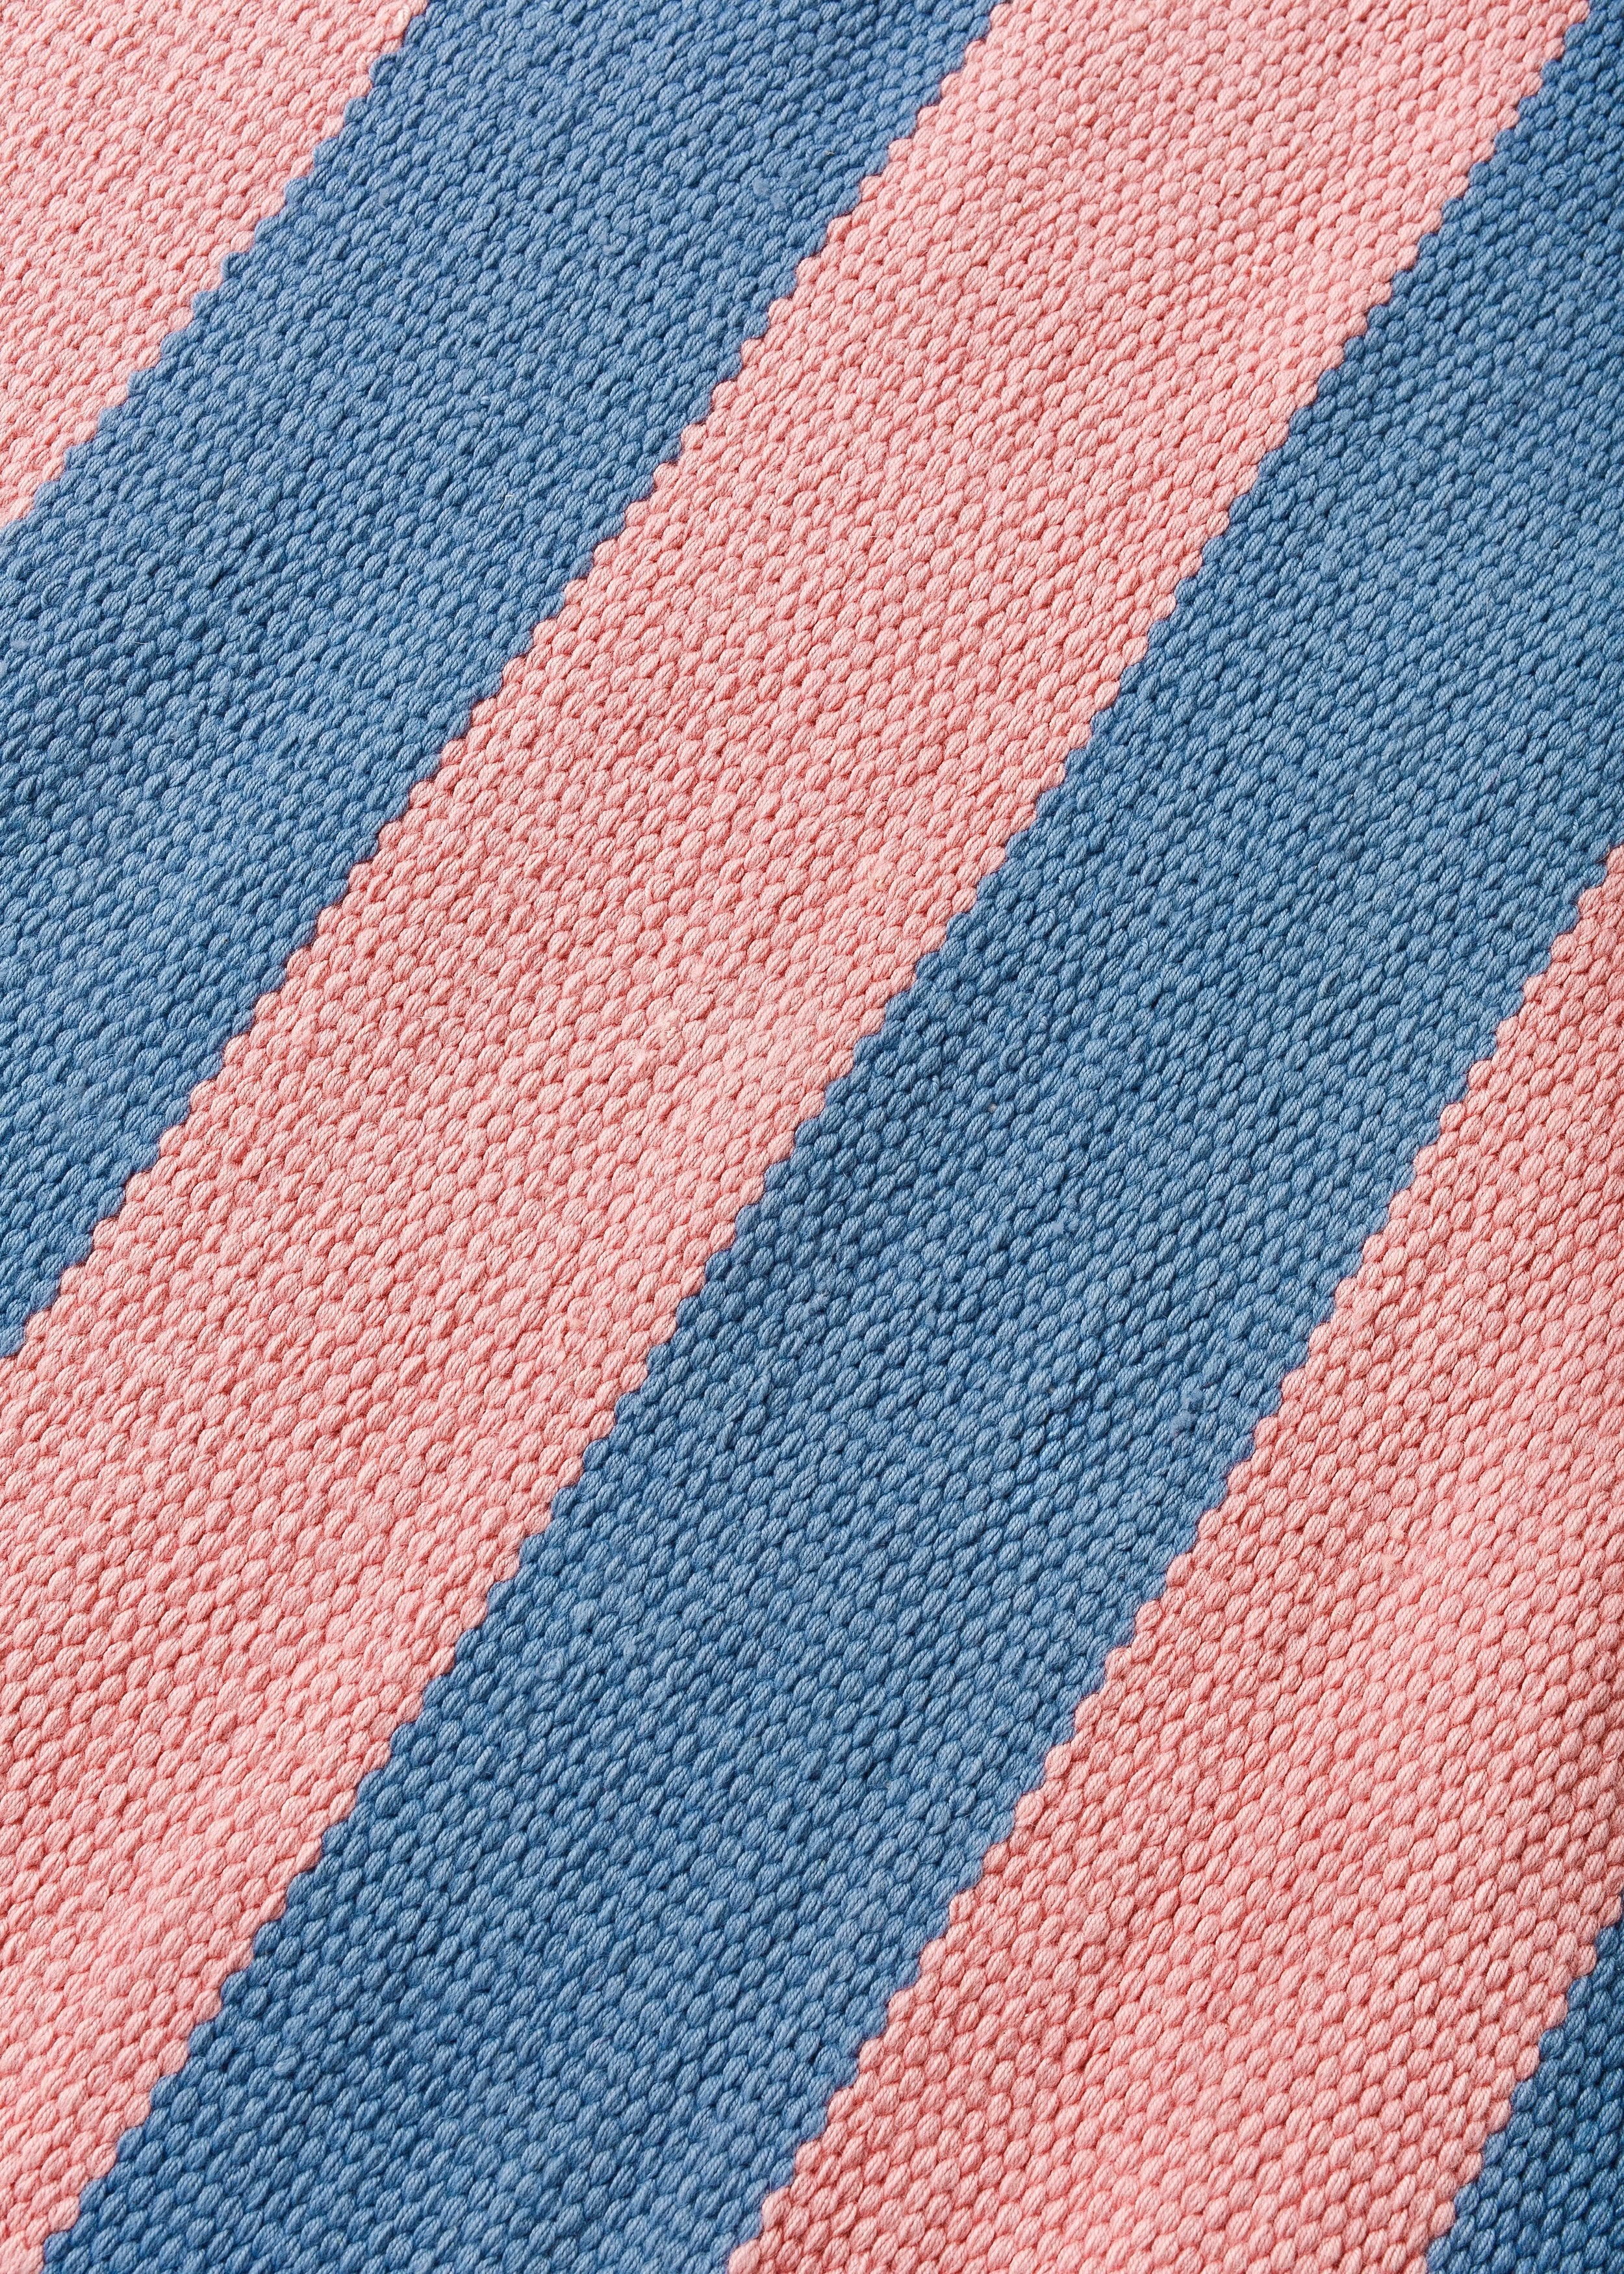 Riaz Pink Stripe Cotton Rug